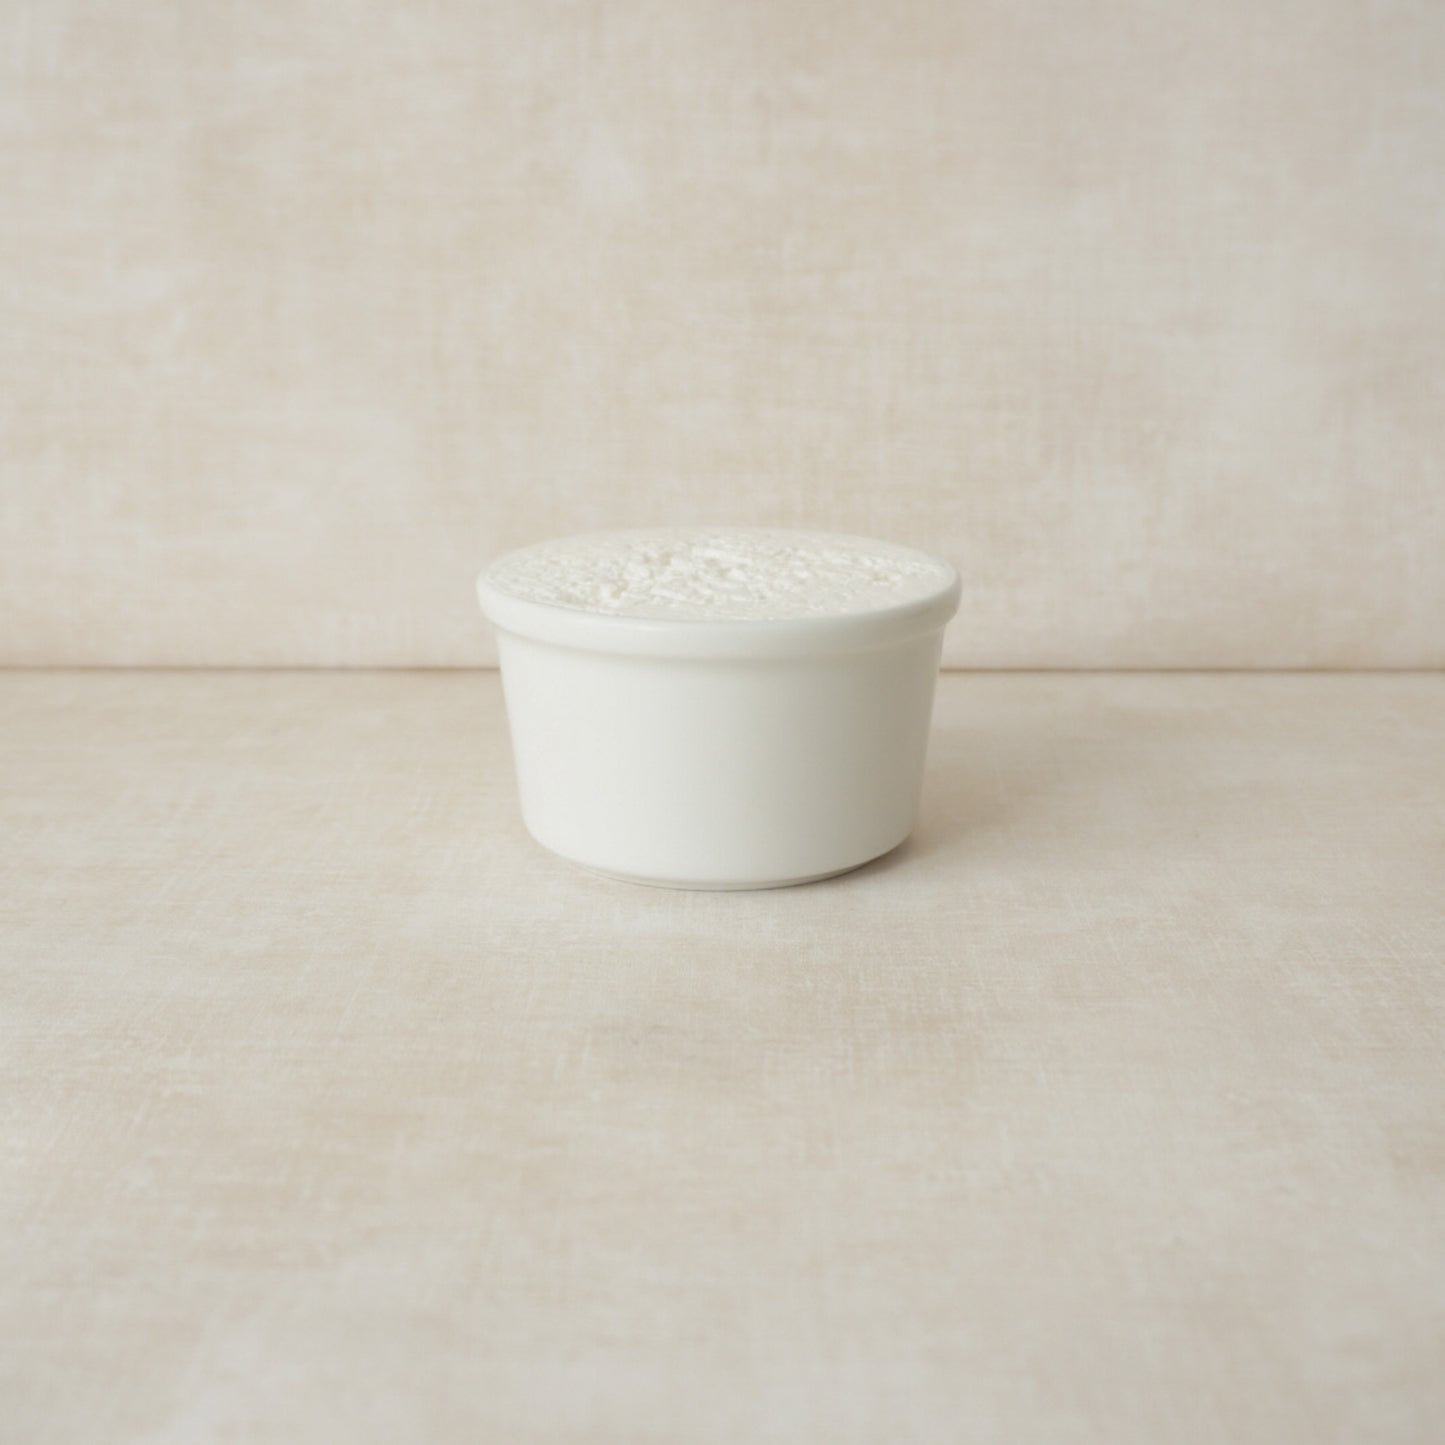 All Natural Dish Soap in Porcelain Bowl